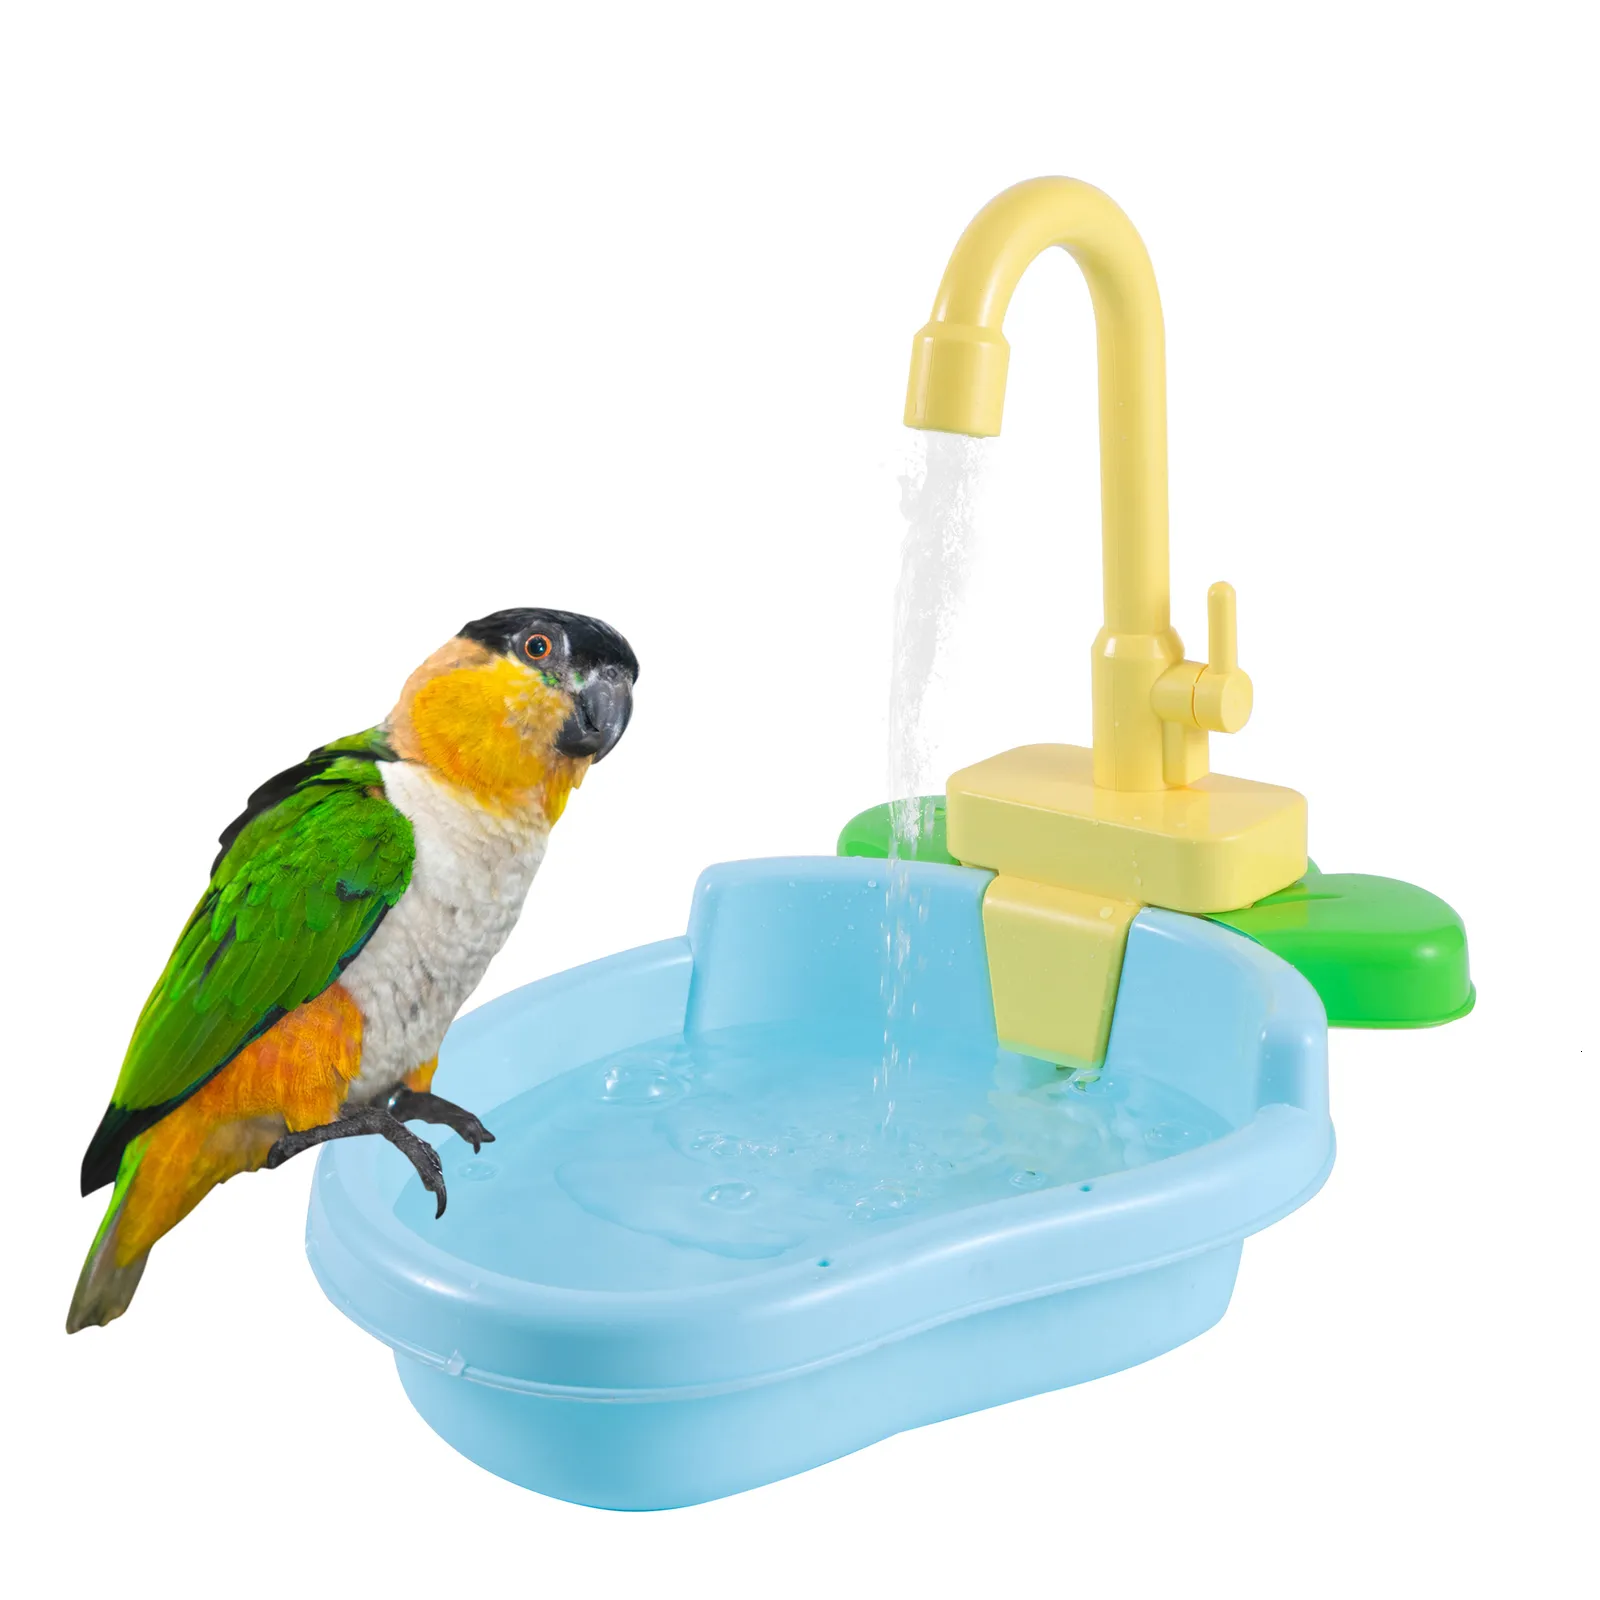 Другие домашние принадлежности Parrot Perch душ птиц ванна бассейн Basin Accessories Accessories Toy Bantub 1pc 230816